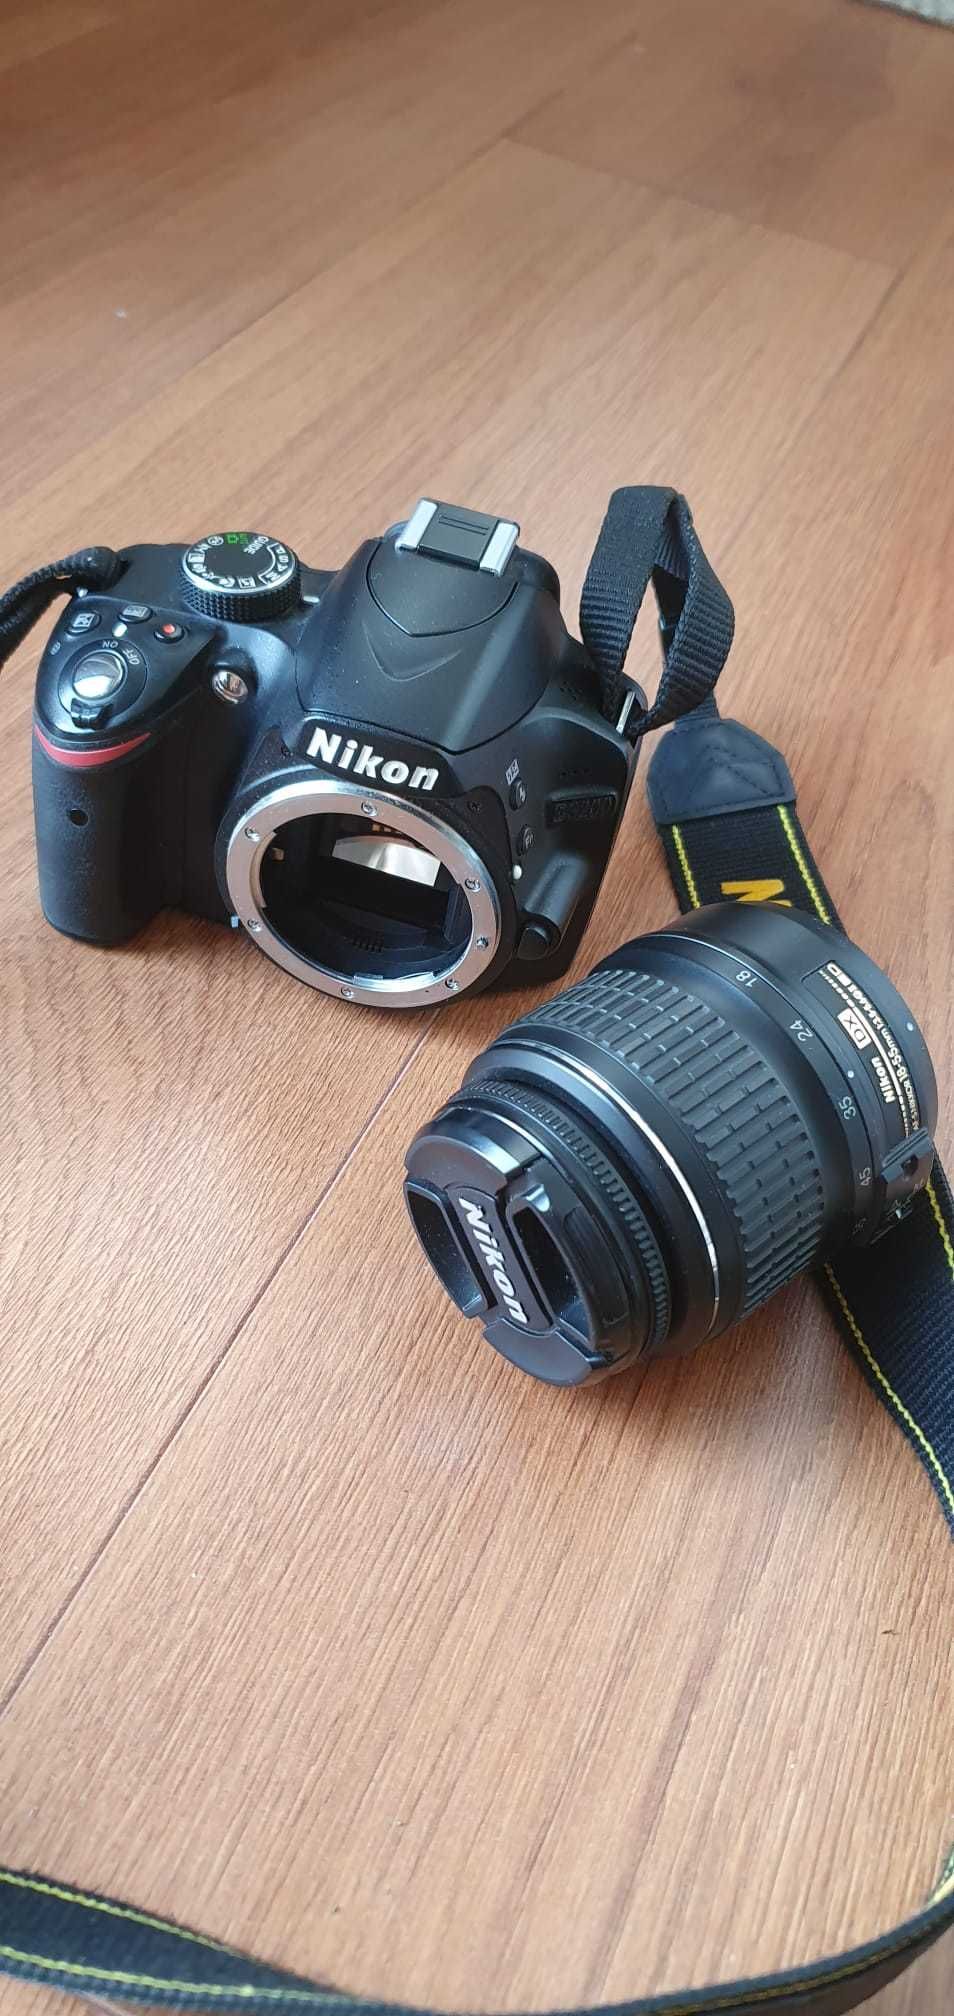 Aparat foto Nikon D3200 + obiectiv ED 18-55mm + geanta aparat foto